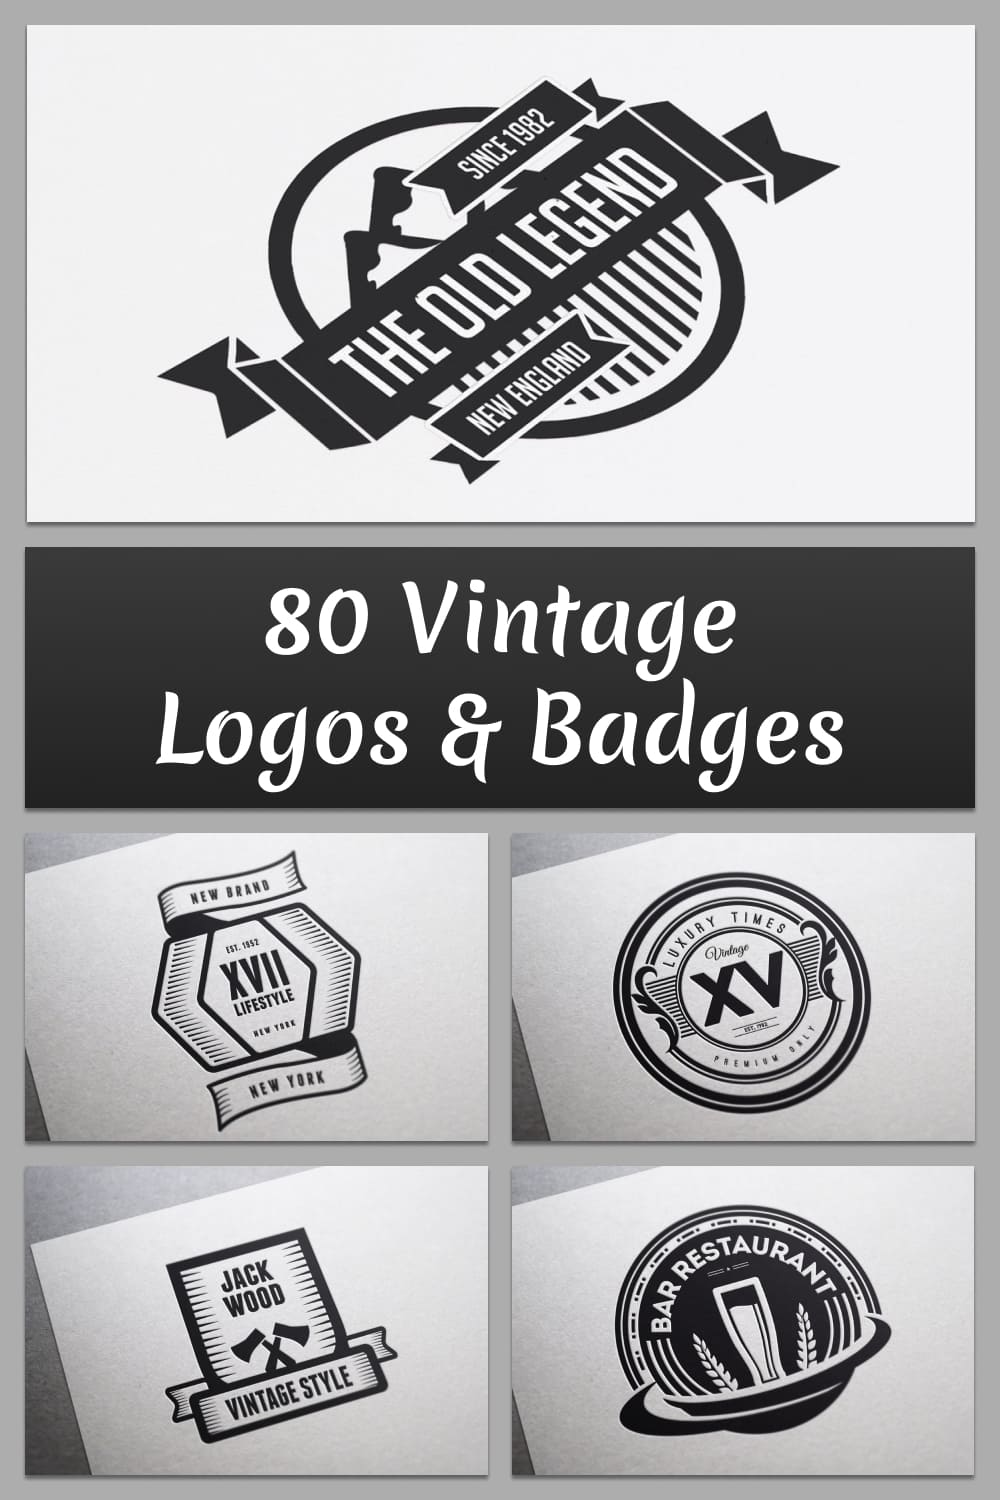 Bundle 80 Vintage Logos & Badges - Pinterest Image Preview.